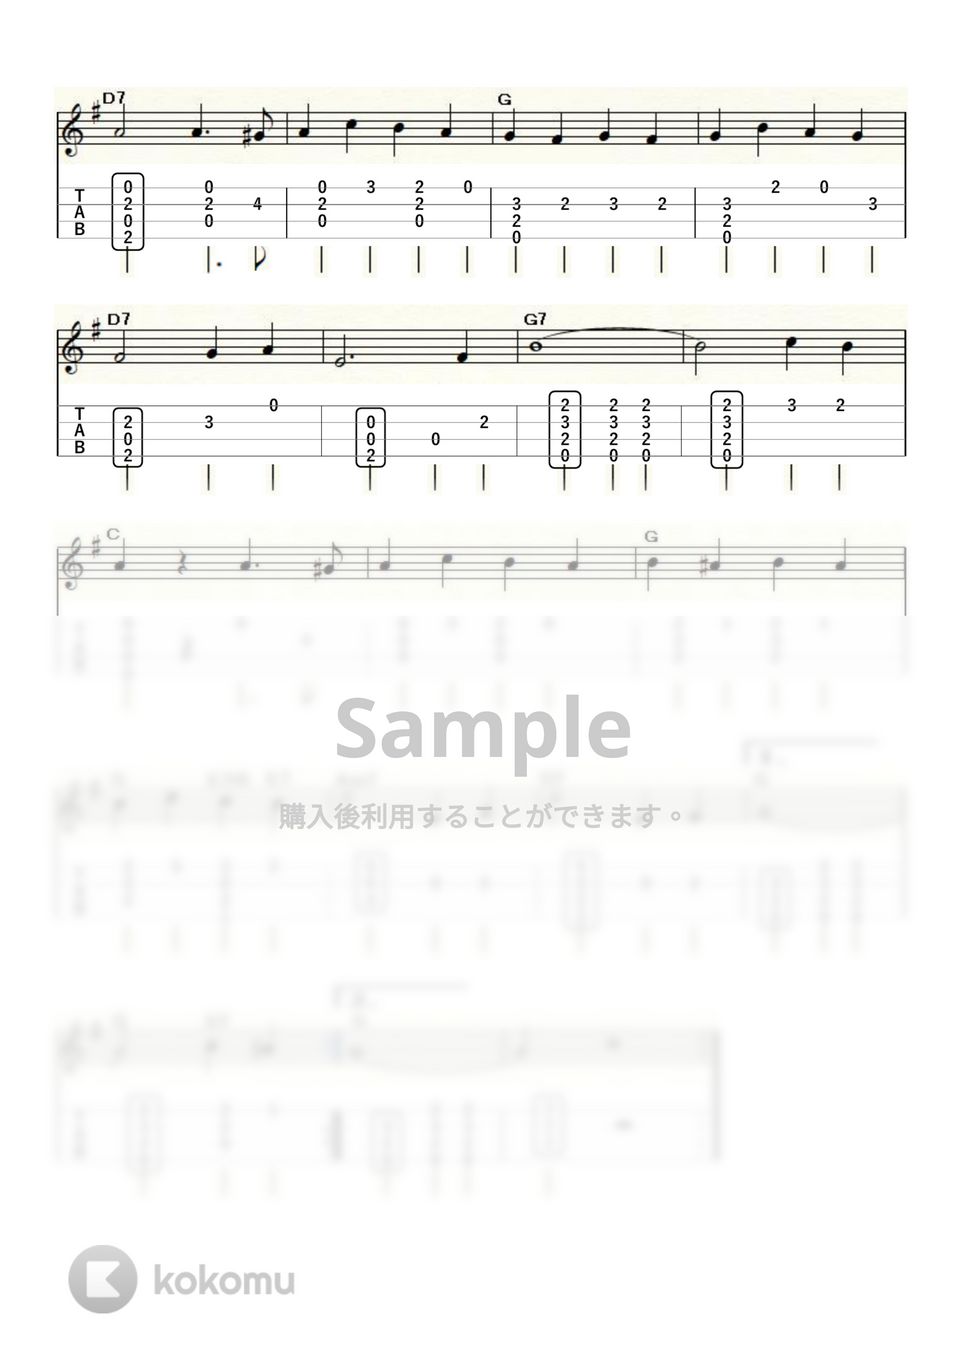 Shall We ダンス? - Shall We Dance? (ｳｸﾚﾚｿﾛ / High-G・Low-G / 中級) by ukulelepapa